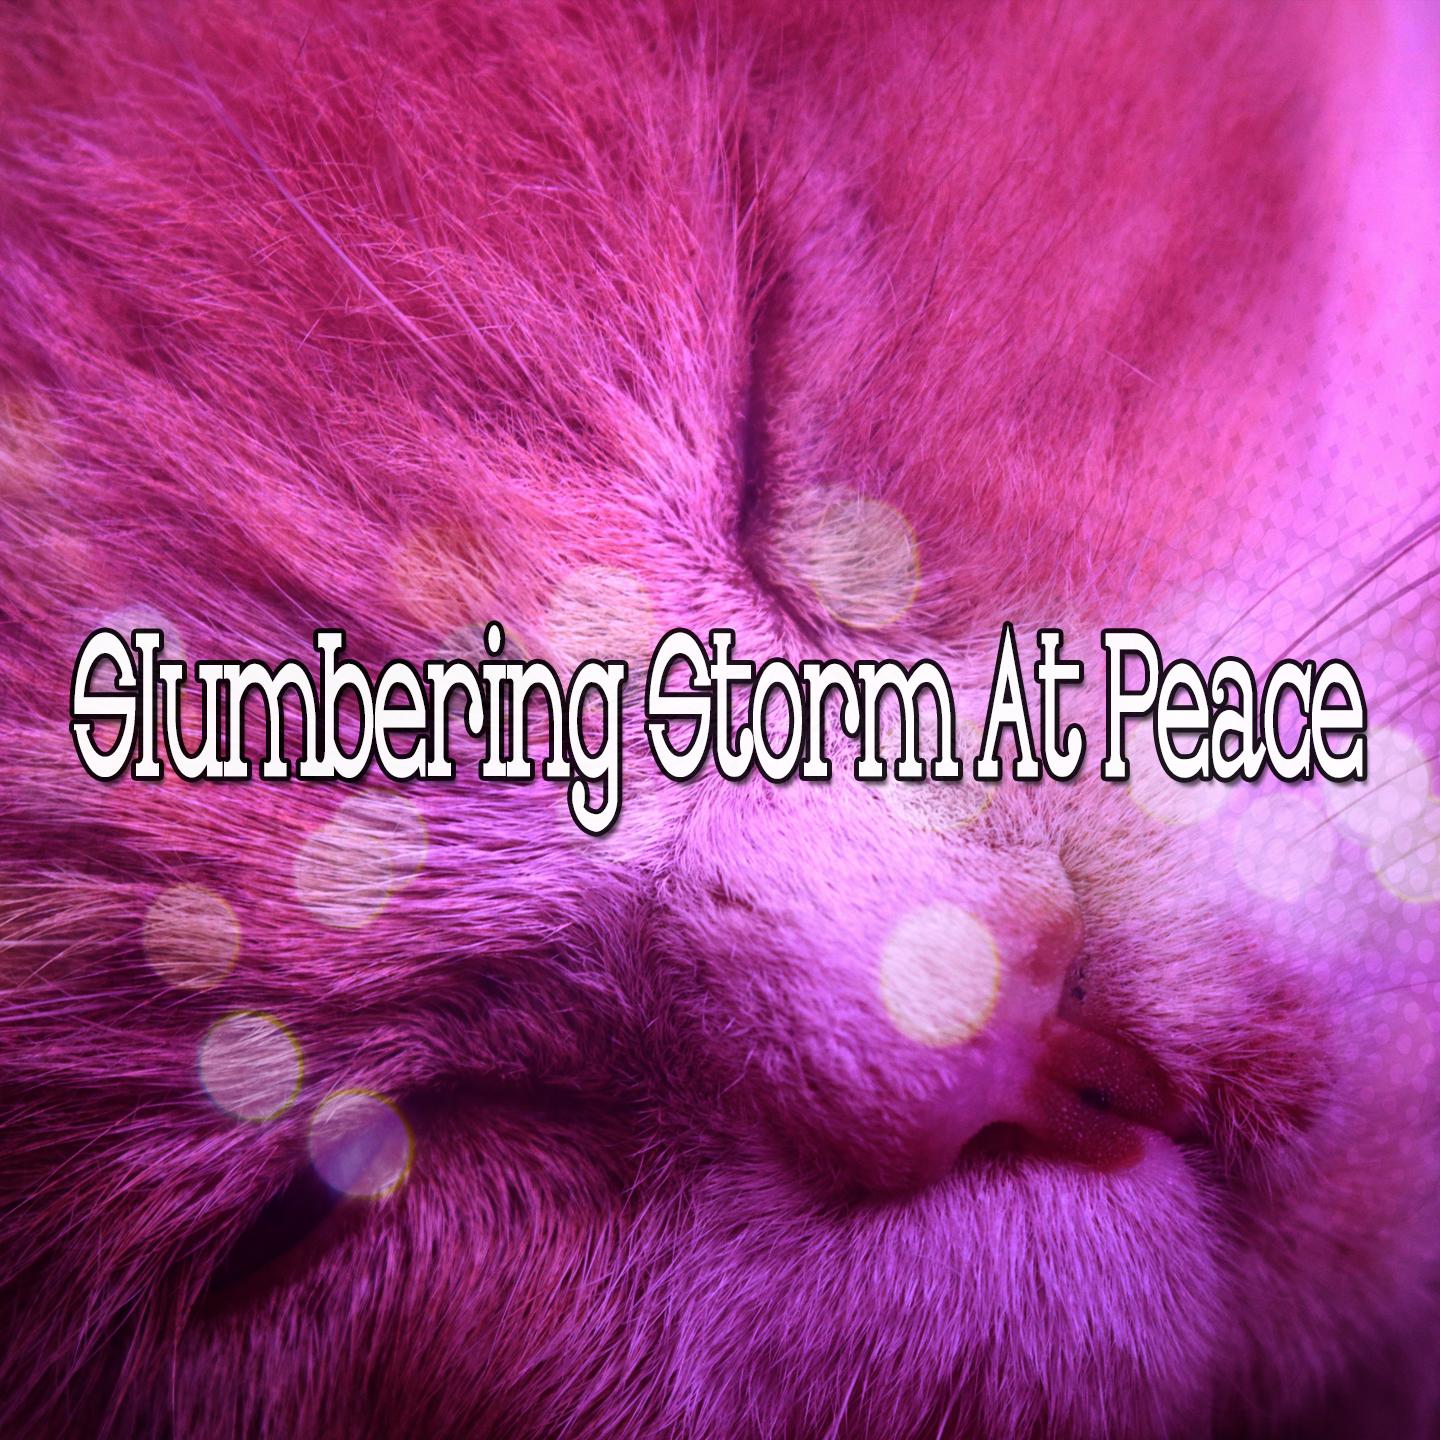 Slumbering Storm At Peace